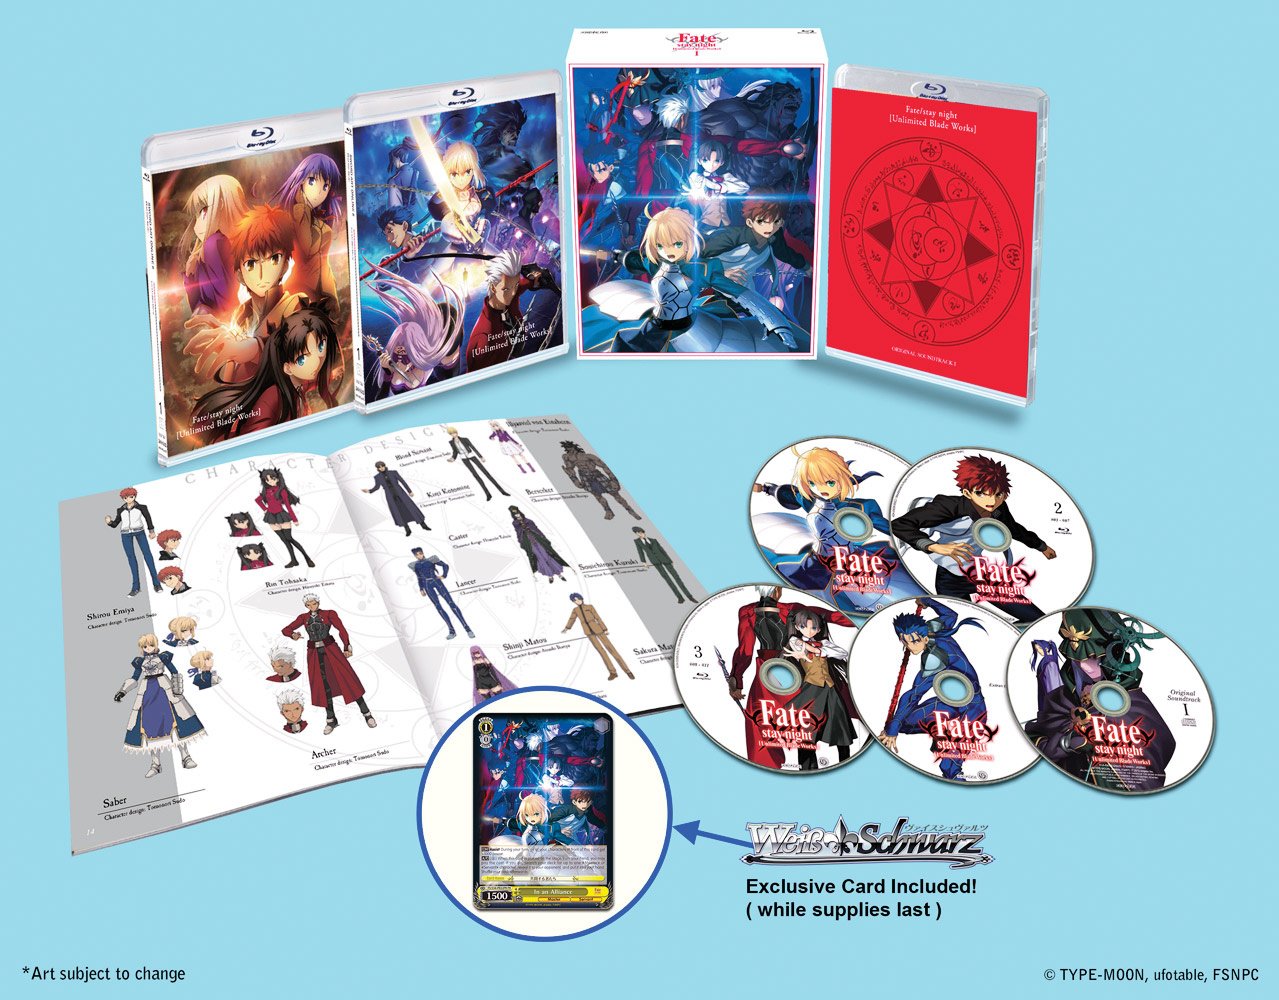 Fate/stay night: UBW Limited Edition Blu-ray Box Set 1 - Tokyo 